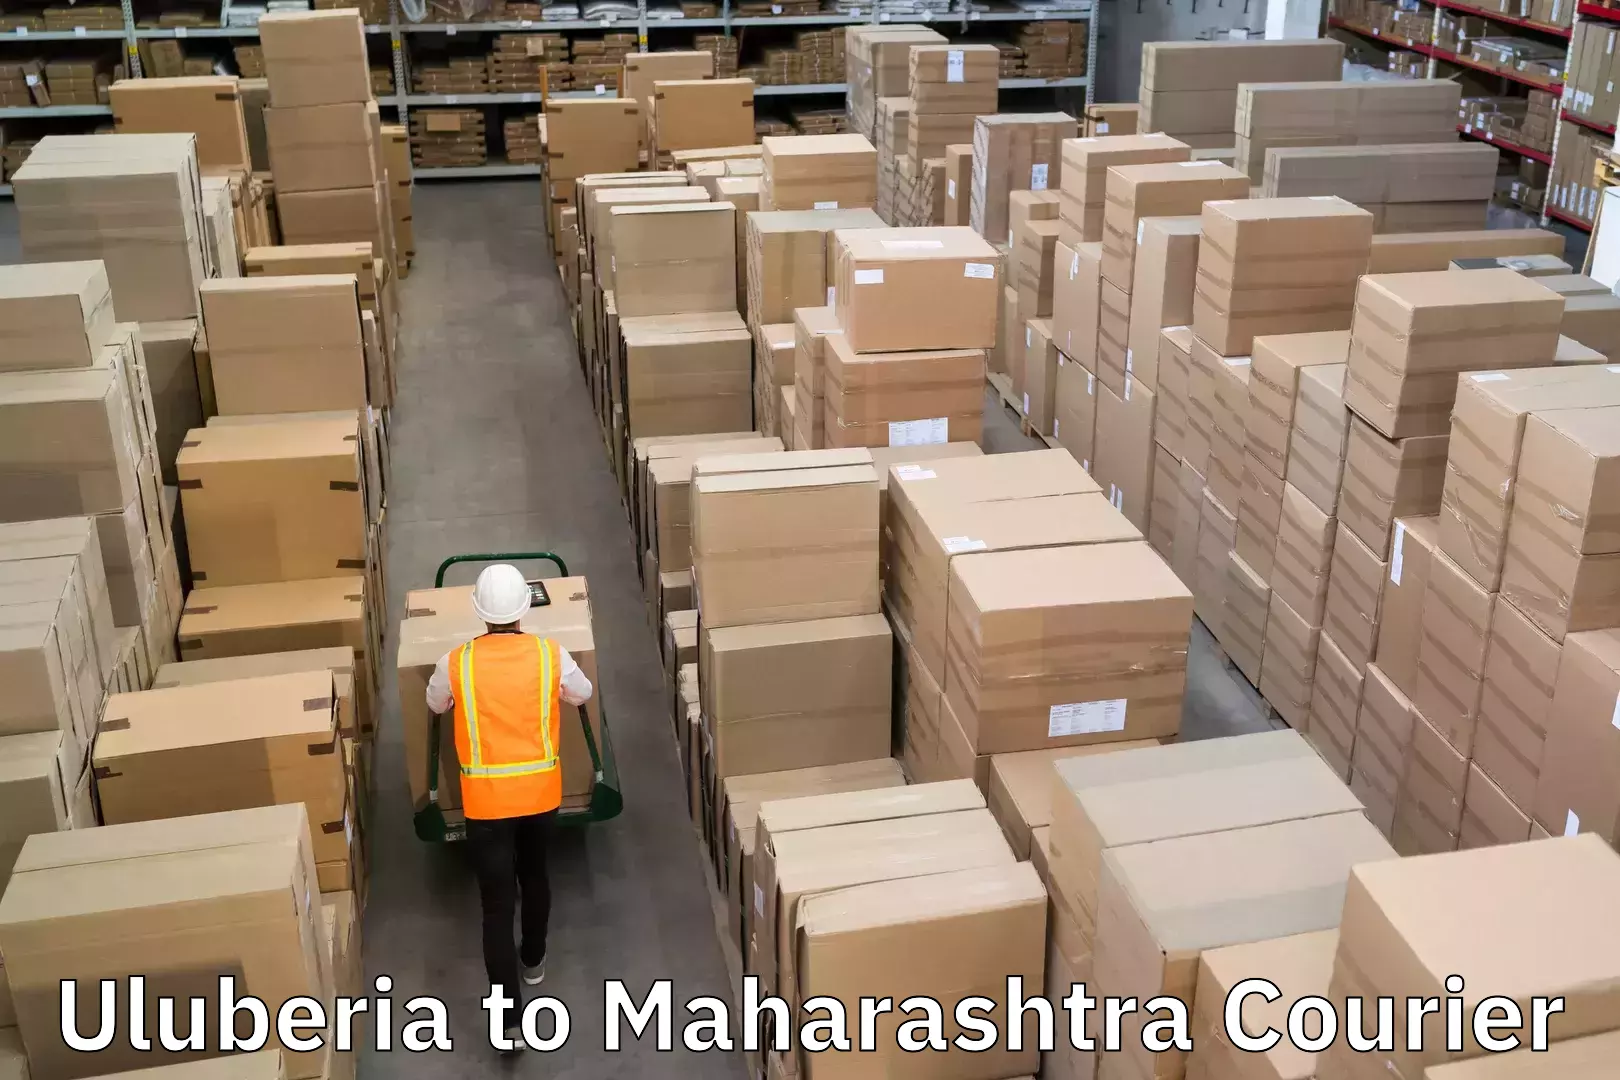 Courier service comparison Uluberia to Maharashtra